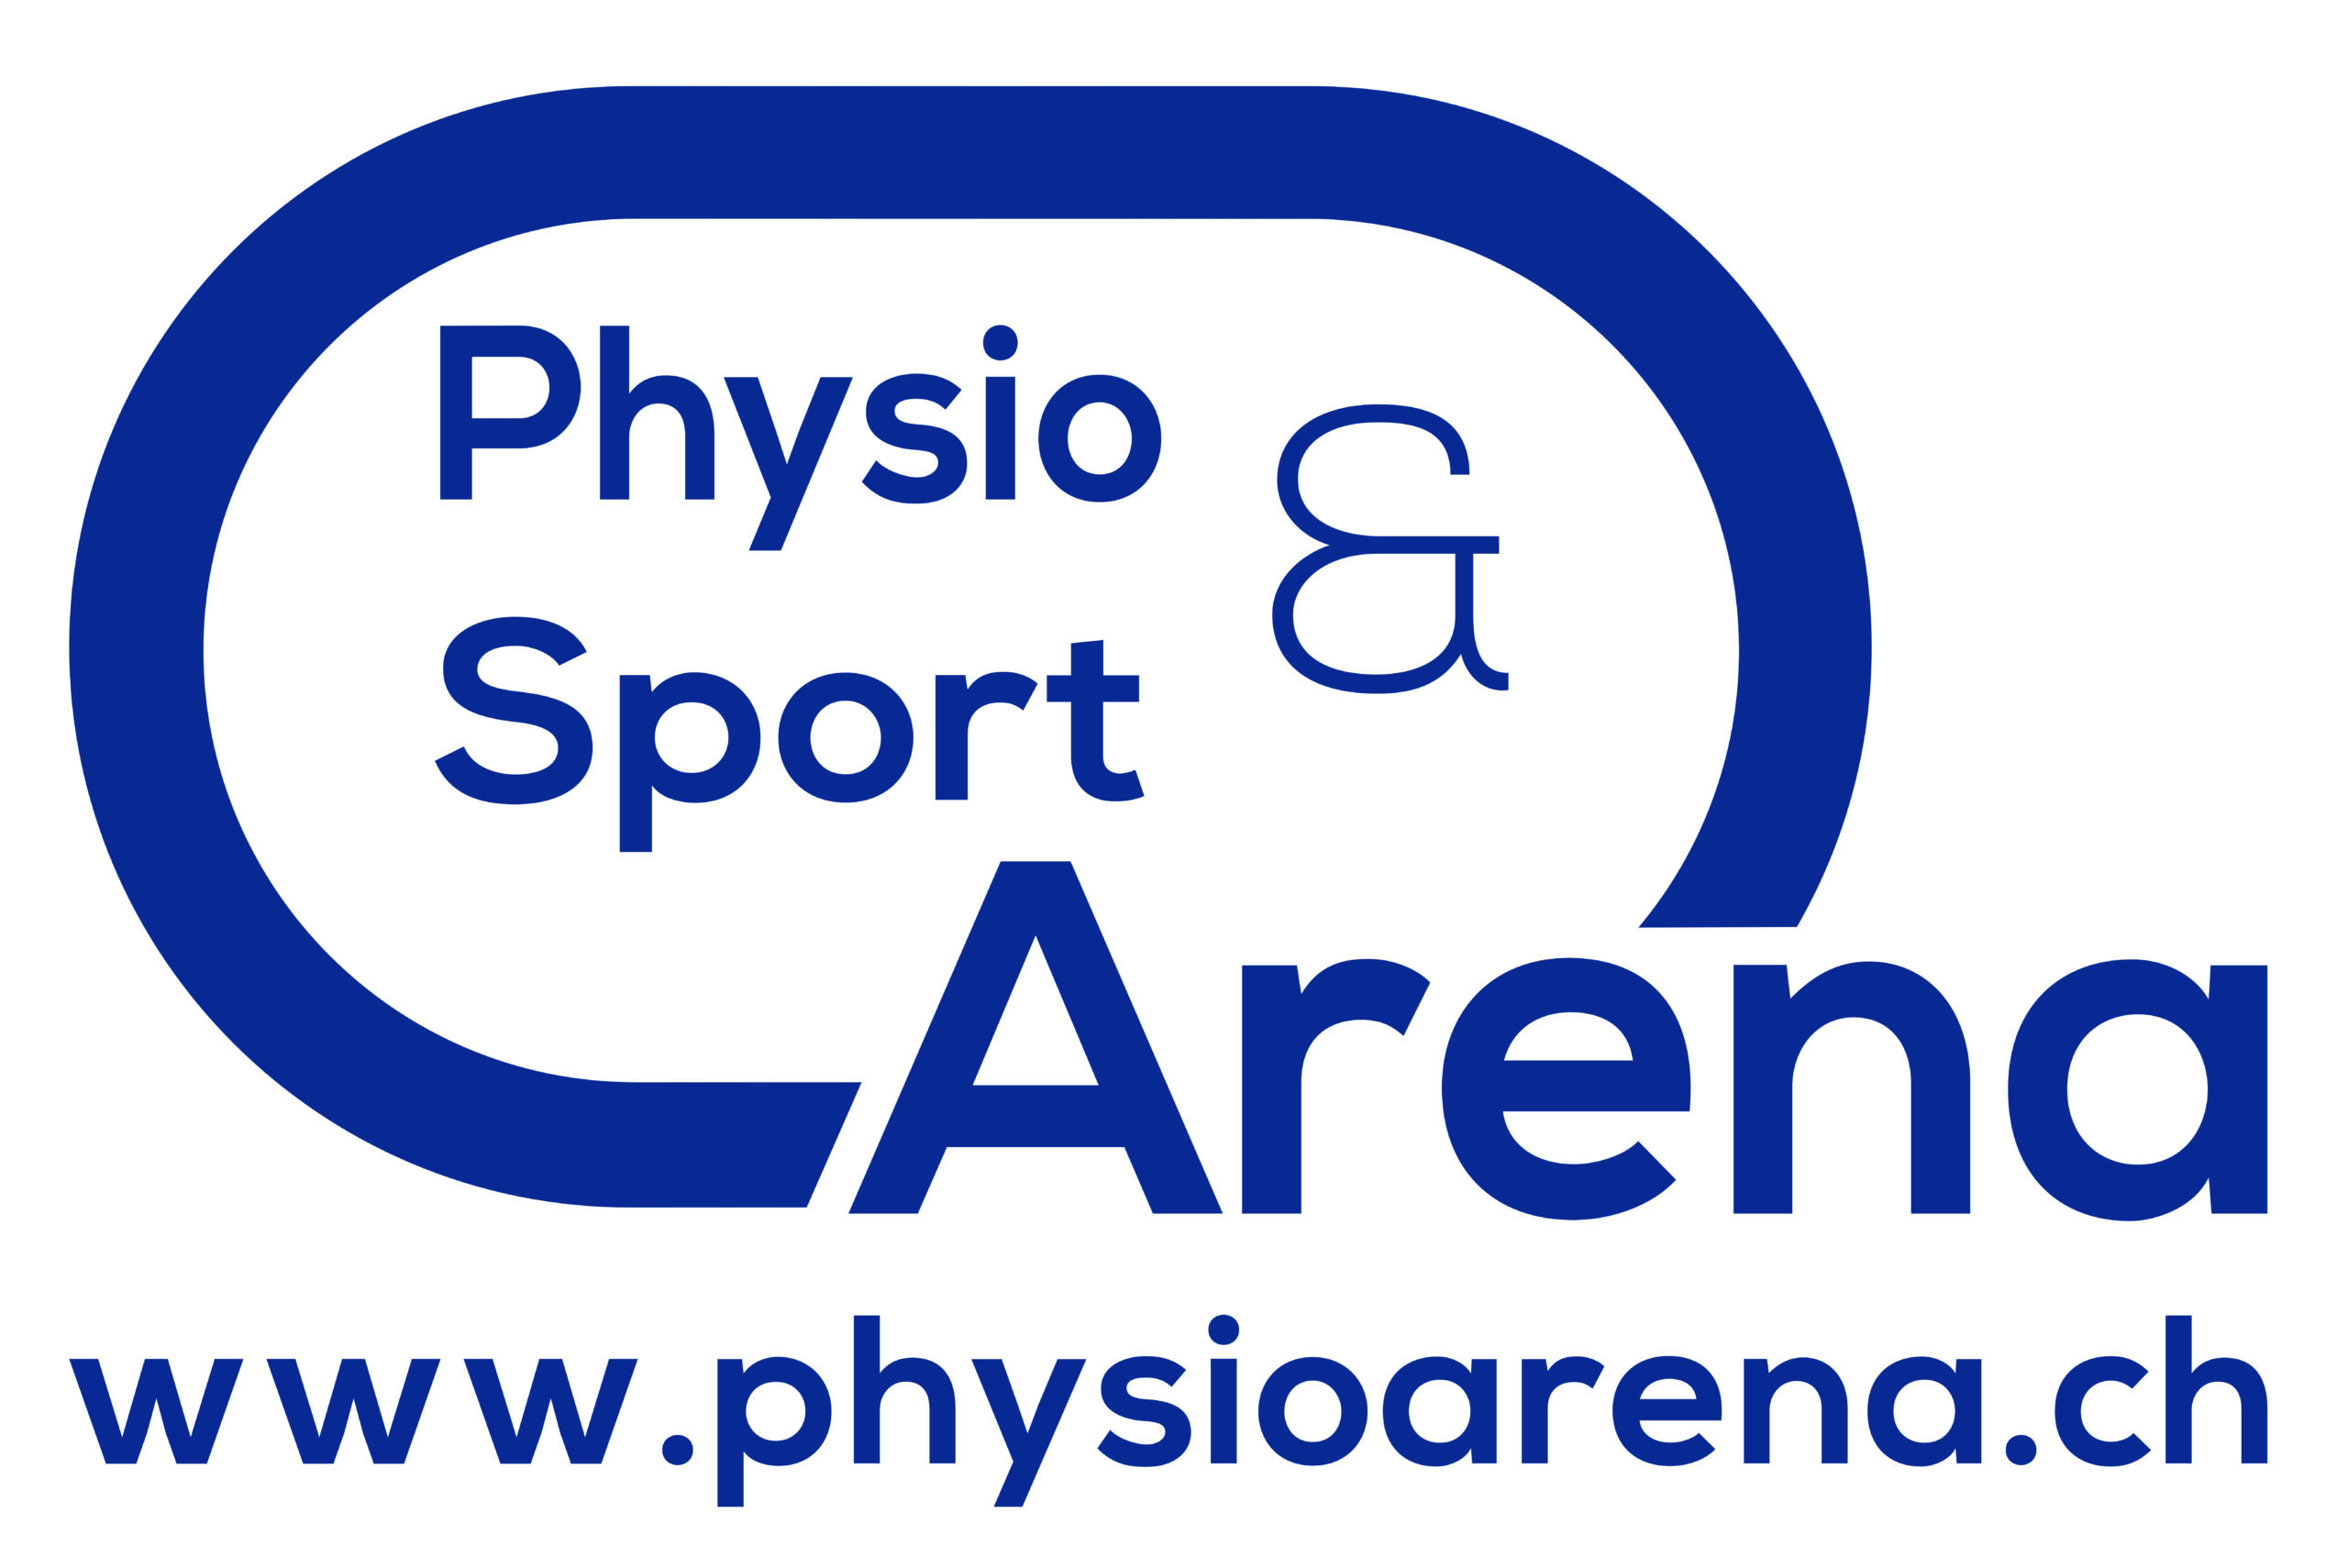 Physio & Sport Arena Logo